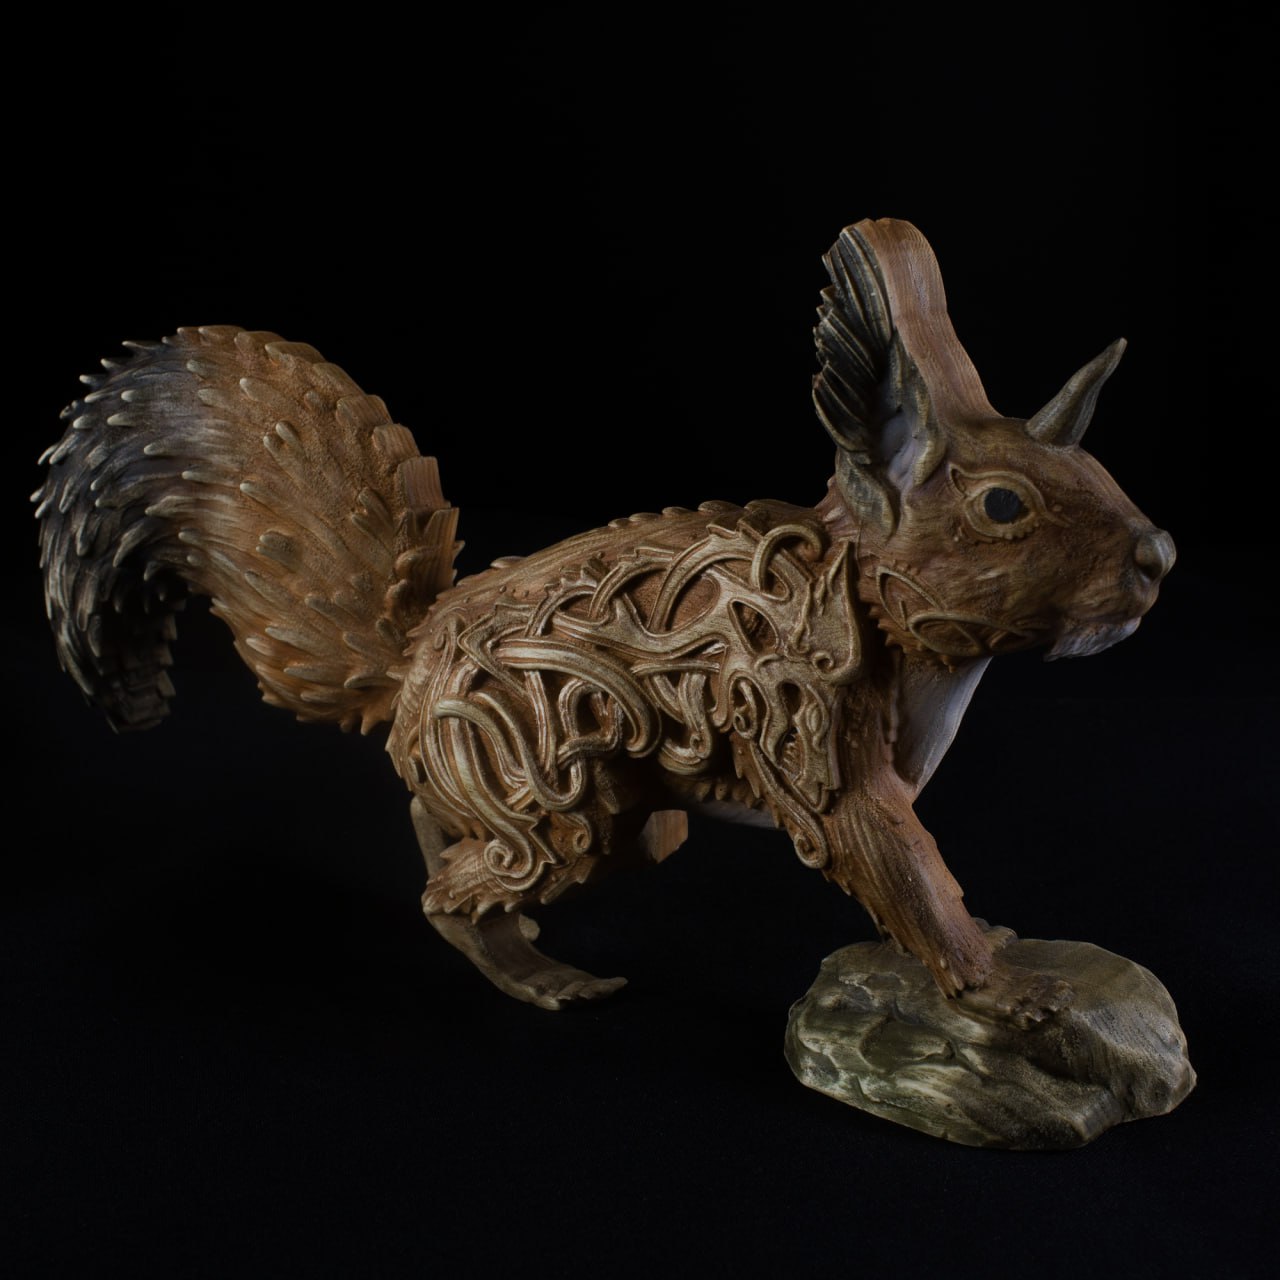 Ratatoskr: The Enchanting Wood Squirrel Statue from Norse Mythology